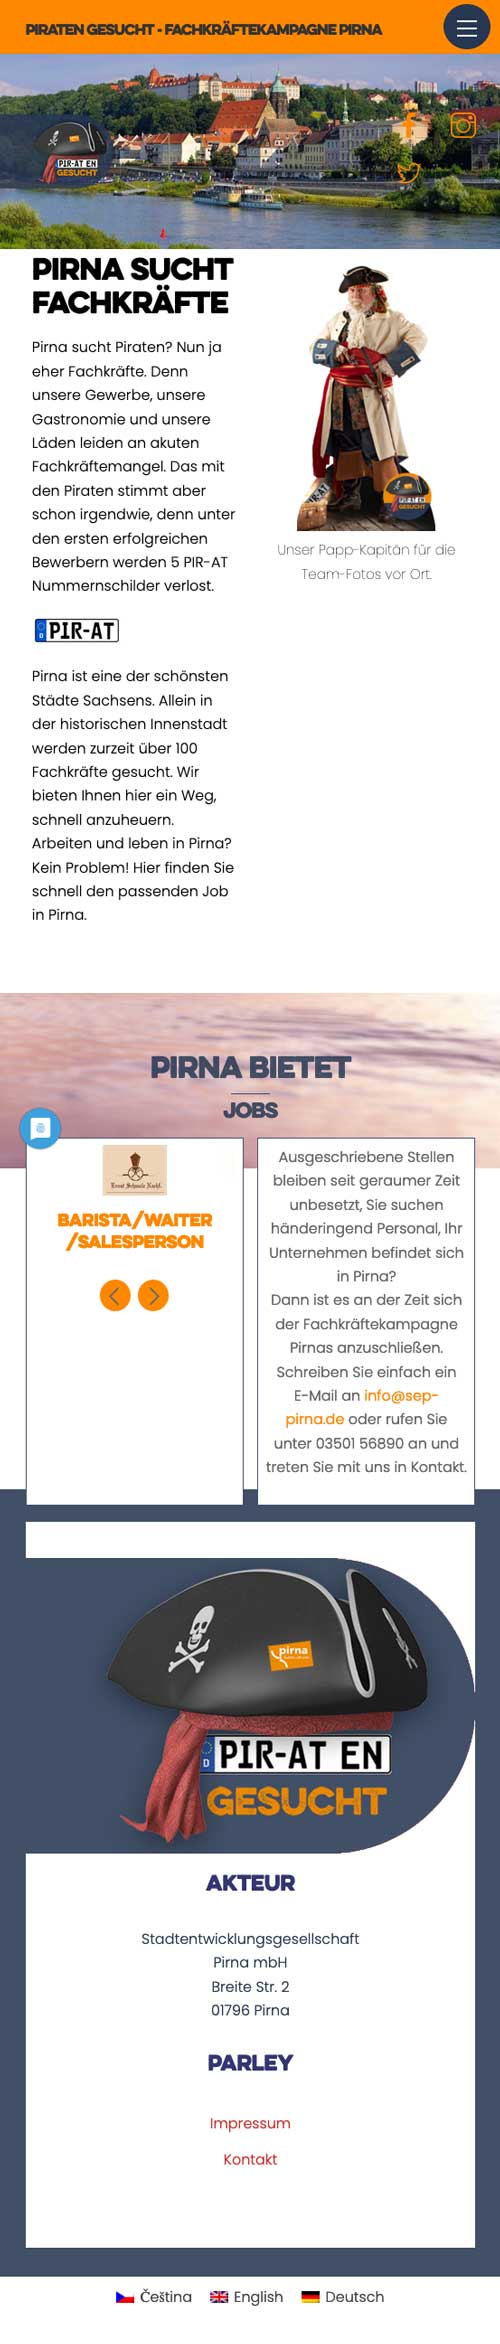 Screenshot-Pirna